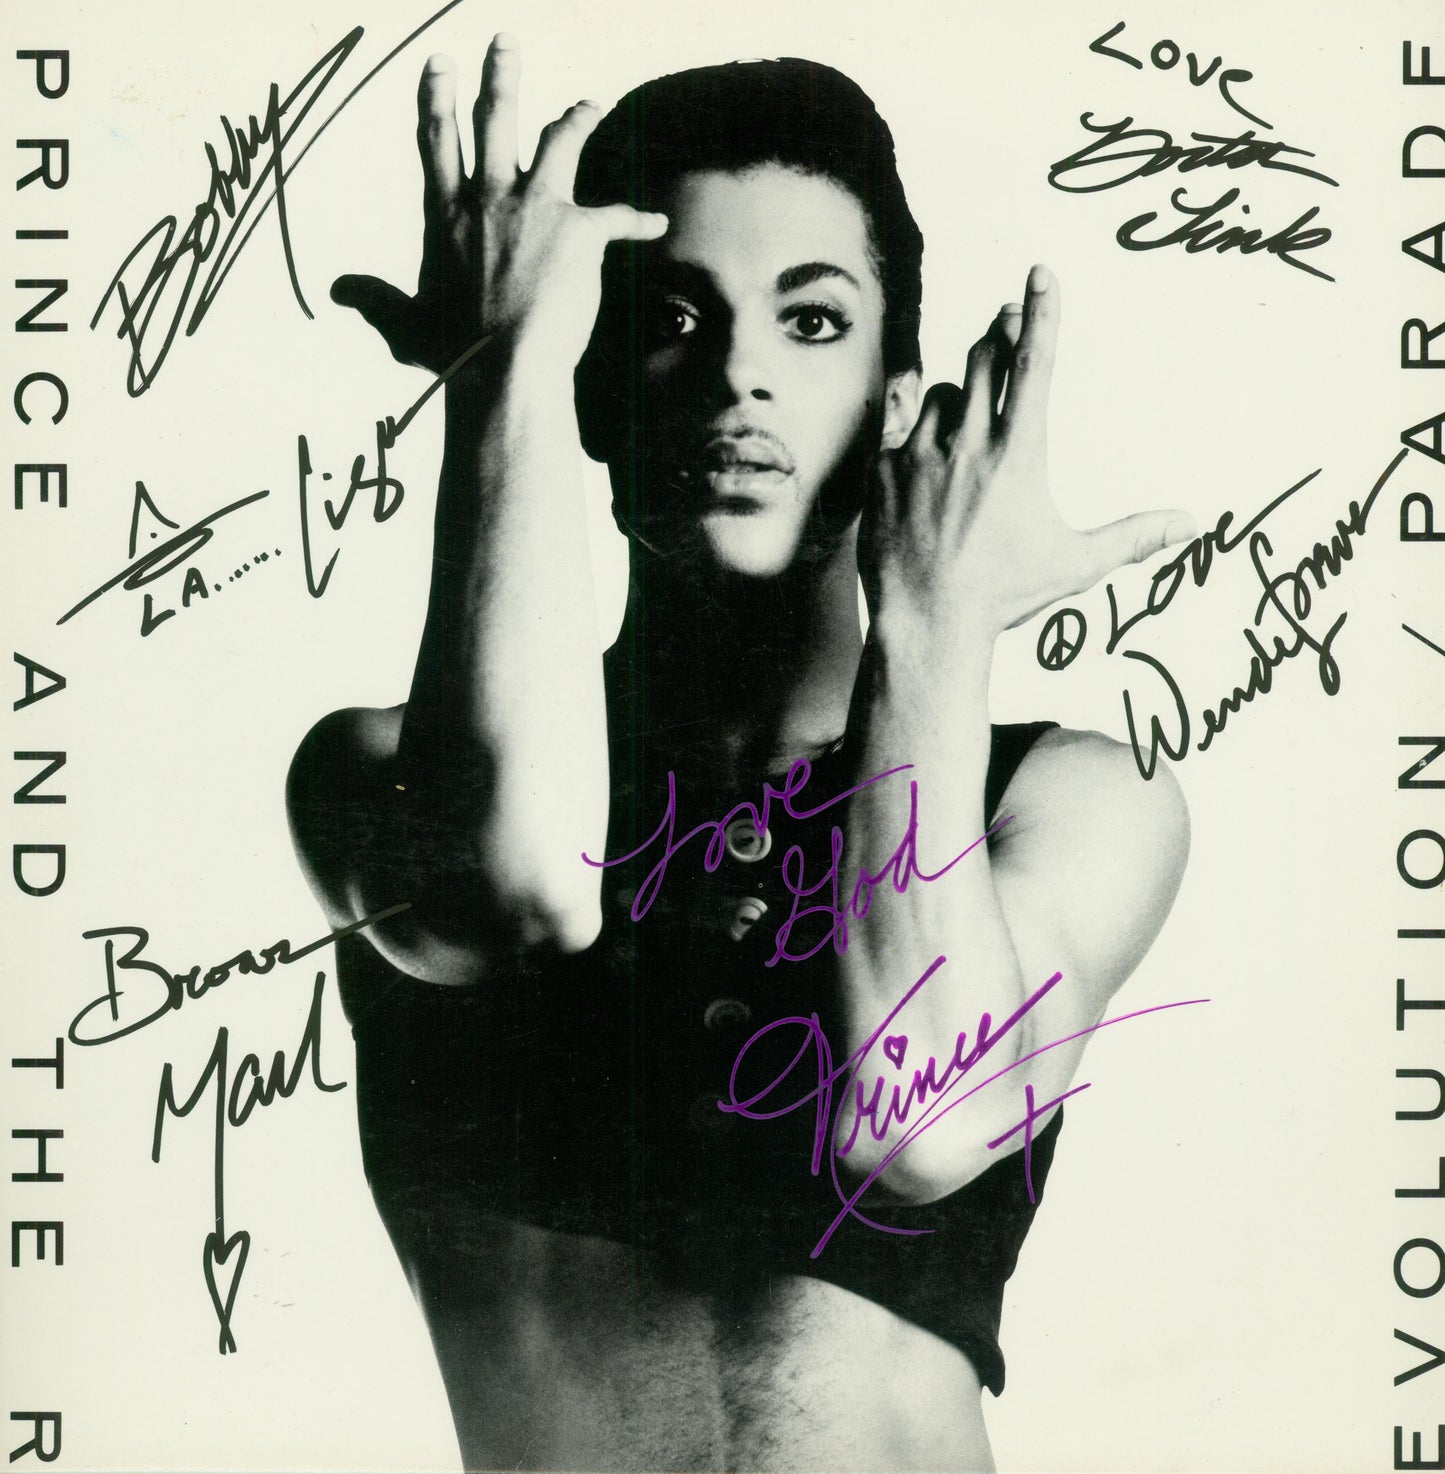 Prince Autographed LP - Zion Graphic Collectibles